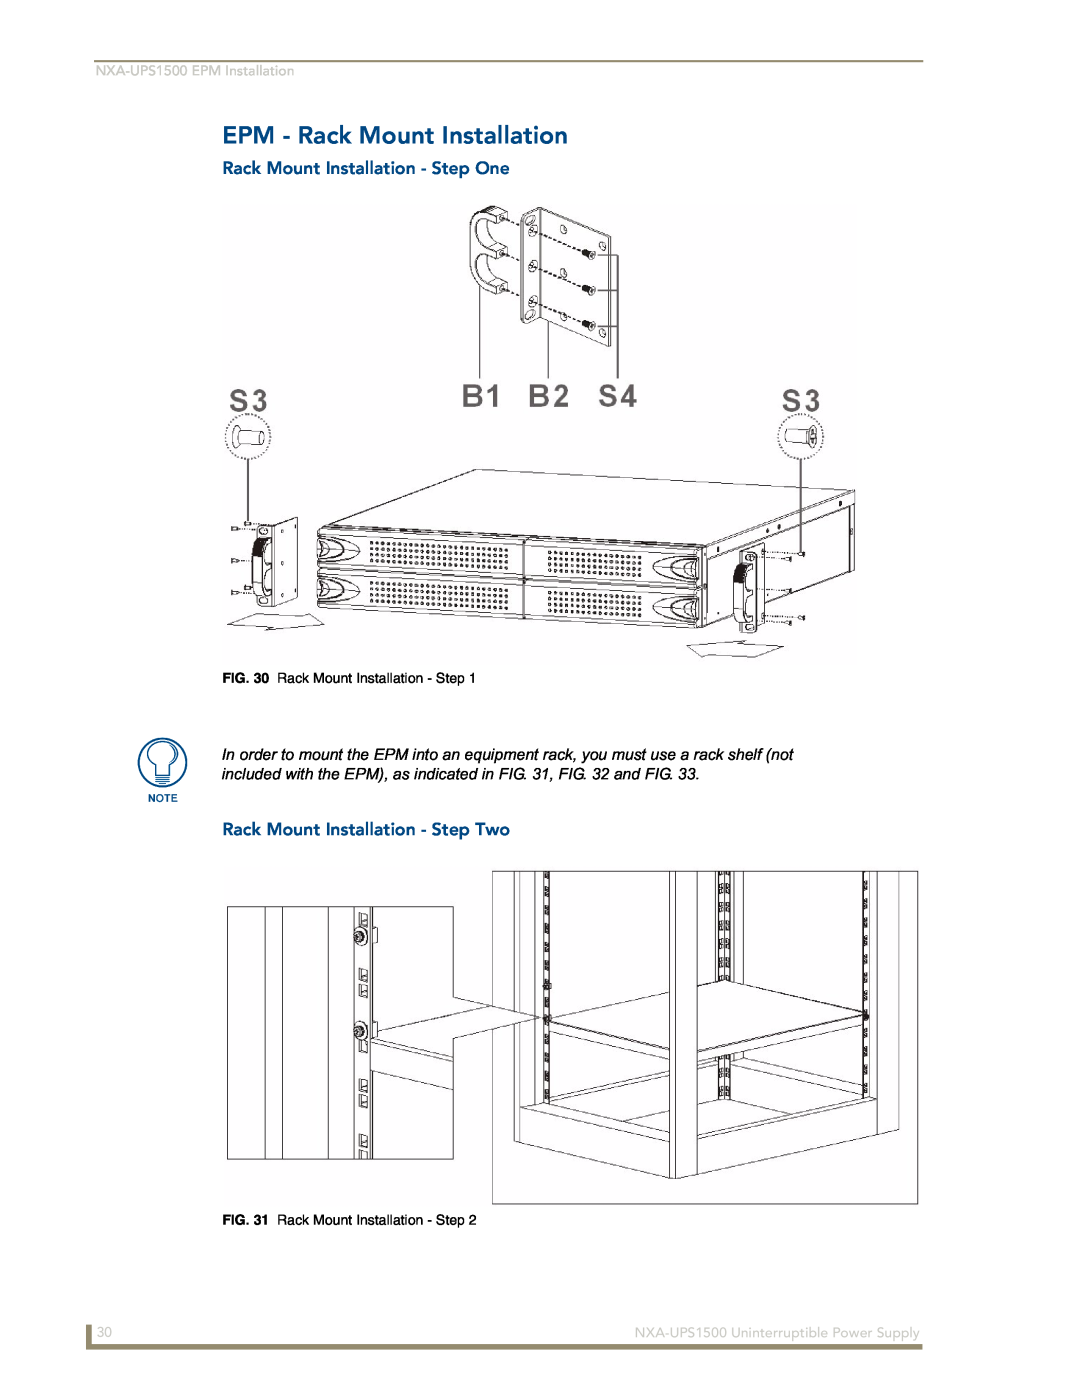 AMX NXA-UPS1500 EPM - Rack Mount Installation, Rack Mount Installation - Step One, Rack Mount Installation - Step Two 